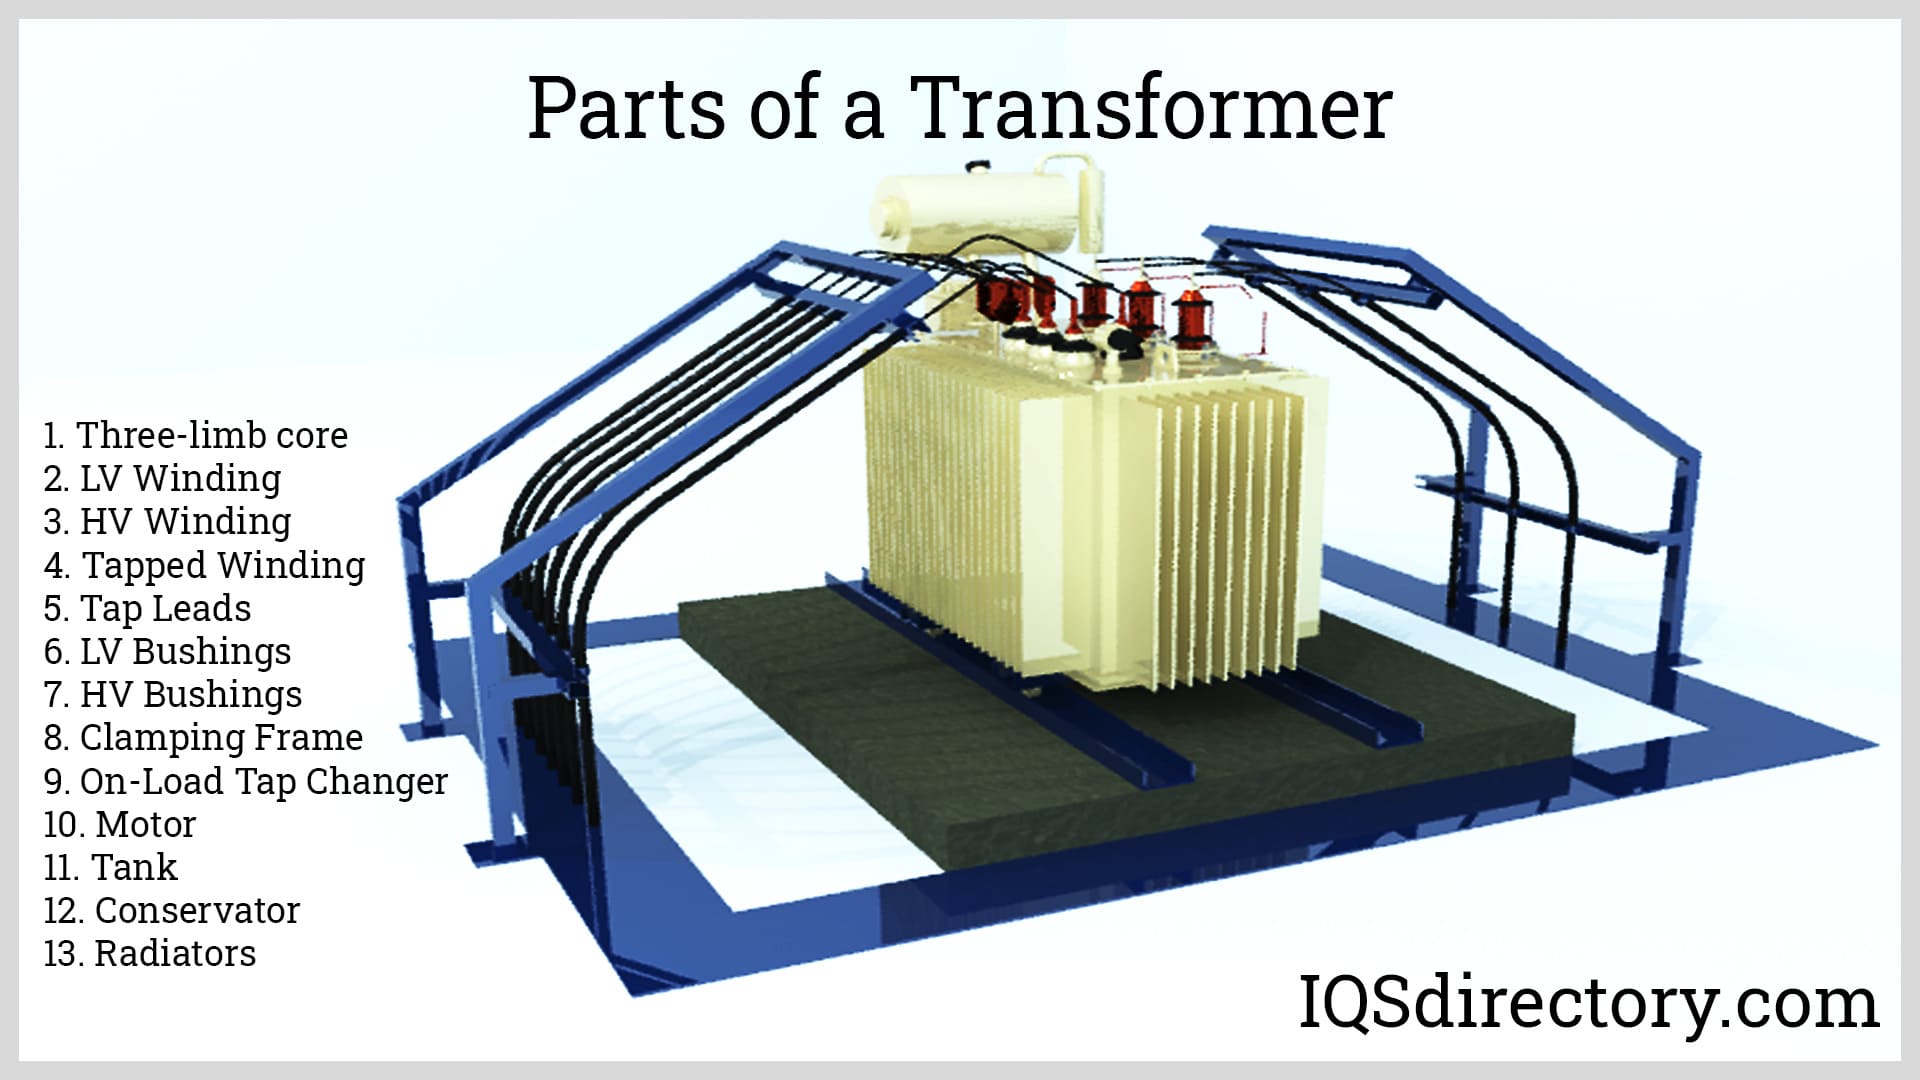 Parts of a Transformer